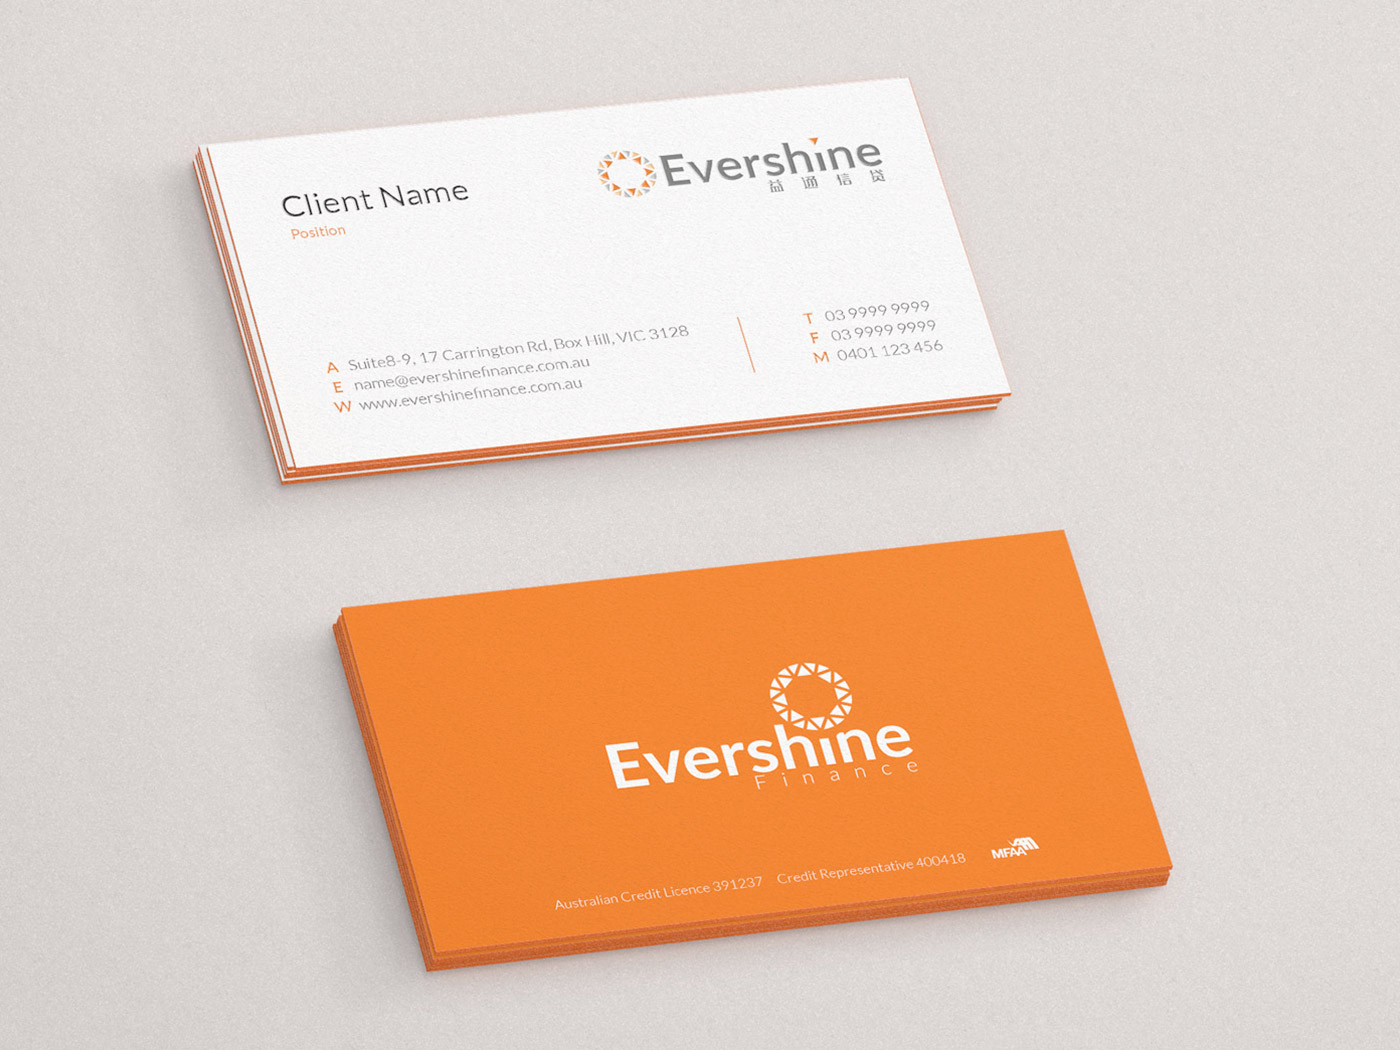 Evershine Finance by Z Creative Studio Branding & Graphic Design Melbourne